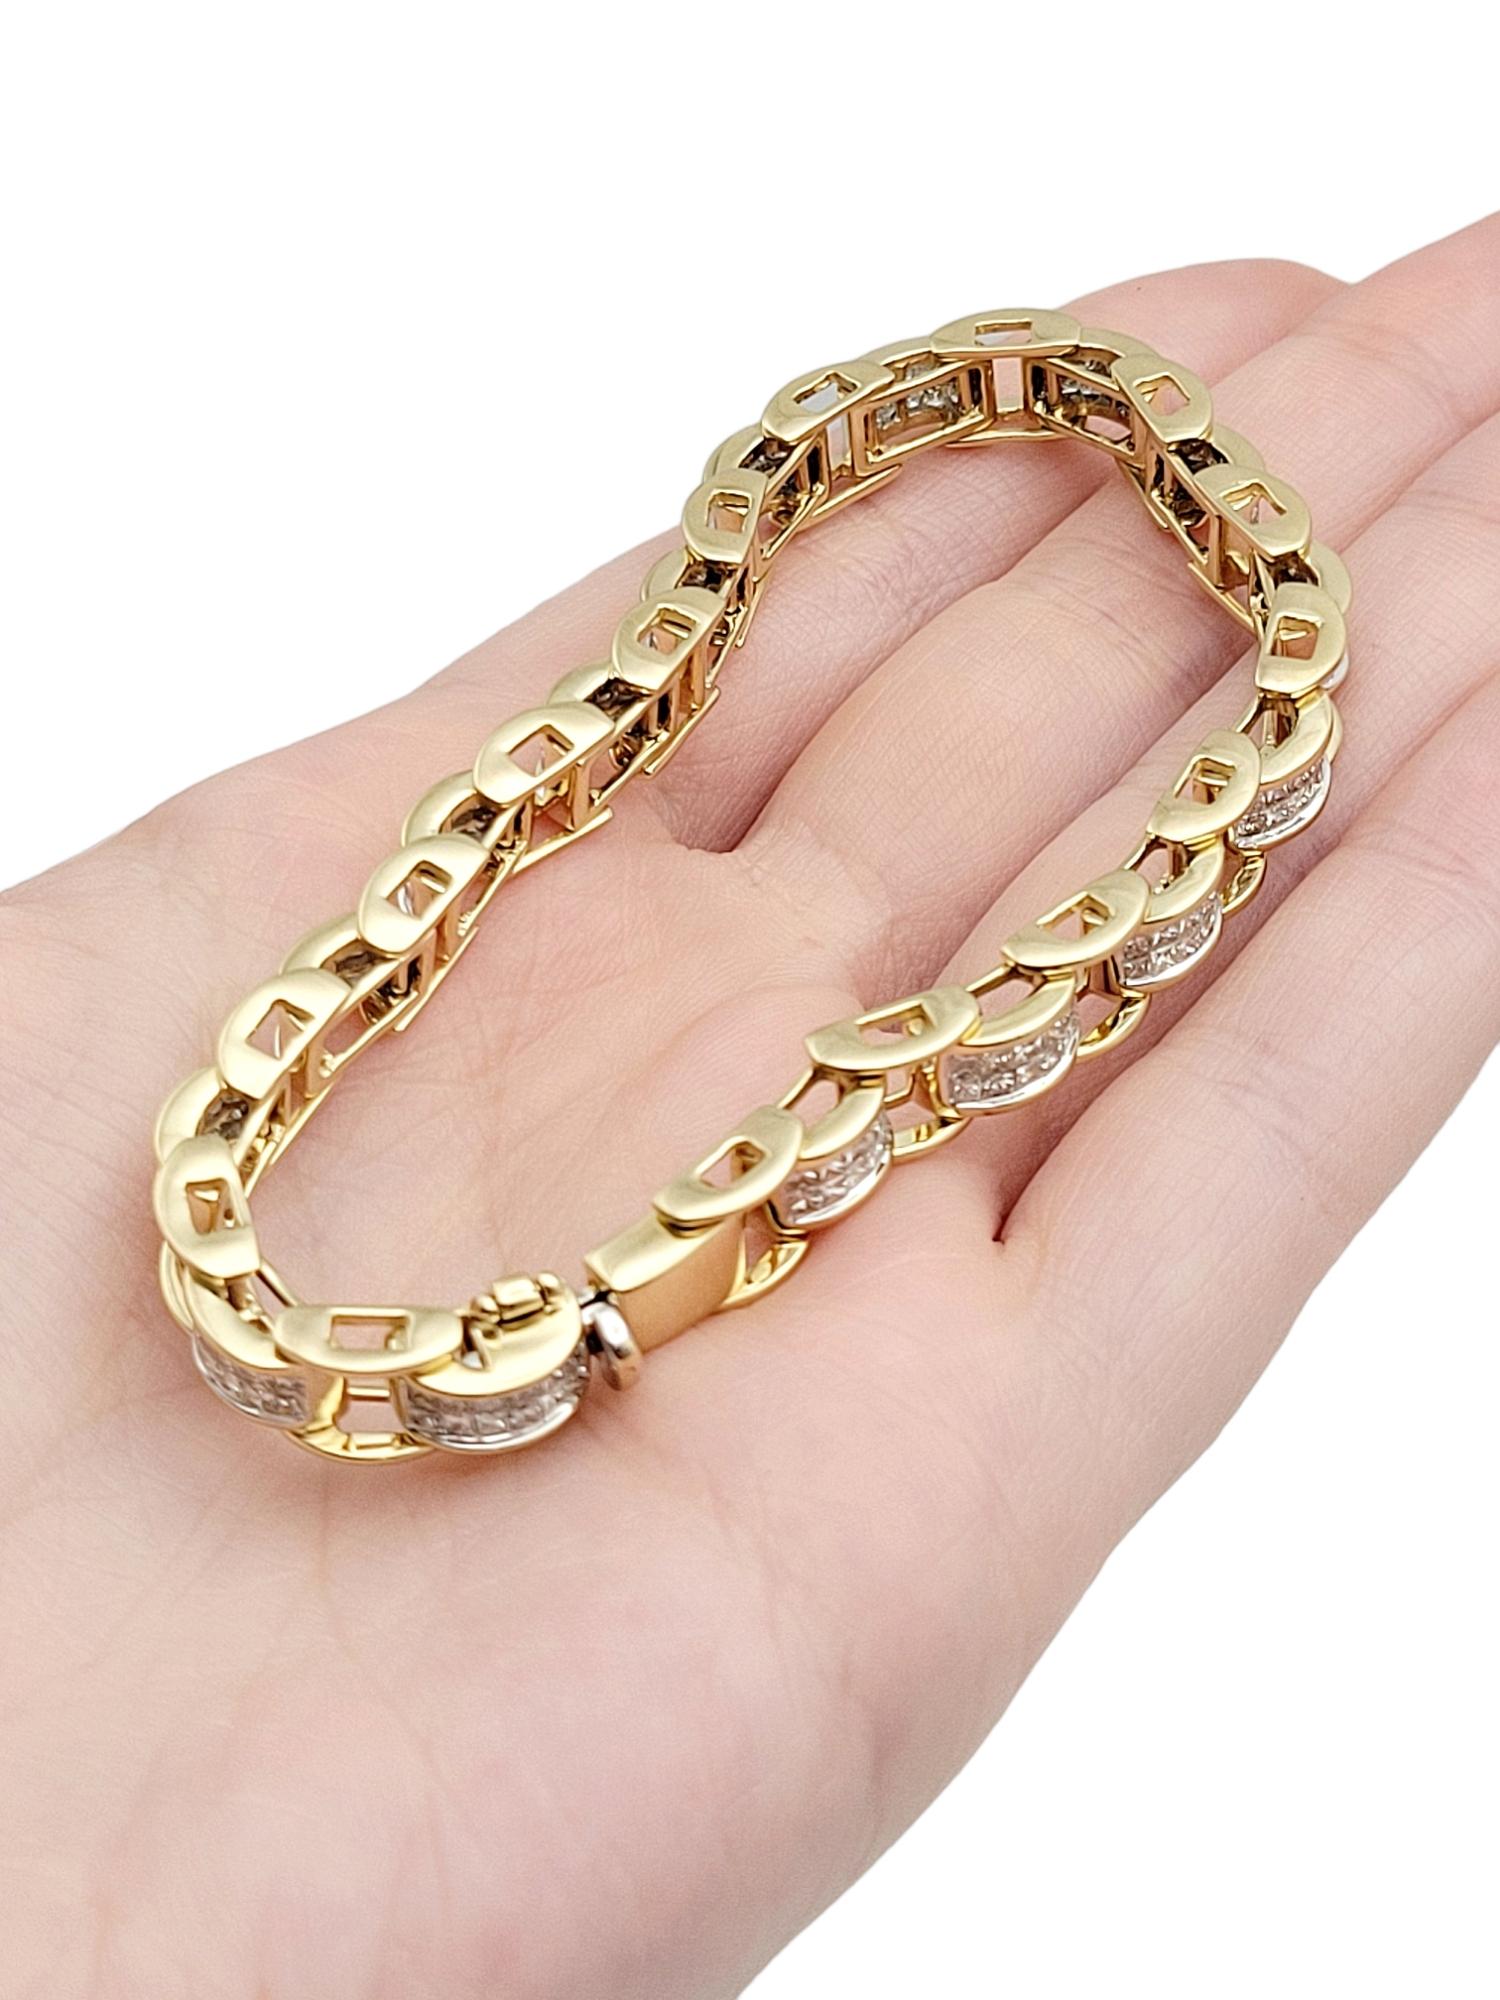 5.00 Carats Total Princess Cut Diamond Bike Chain Style Bracelet in Yellow Gold 2